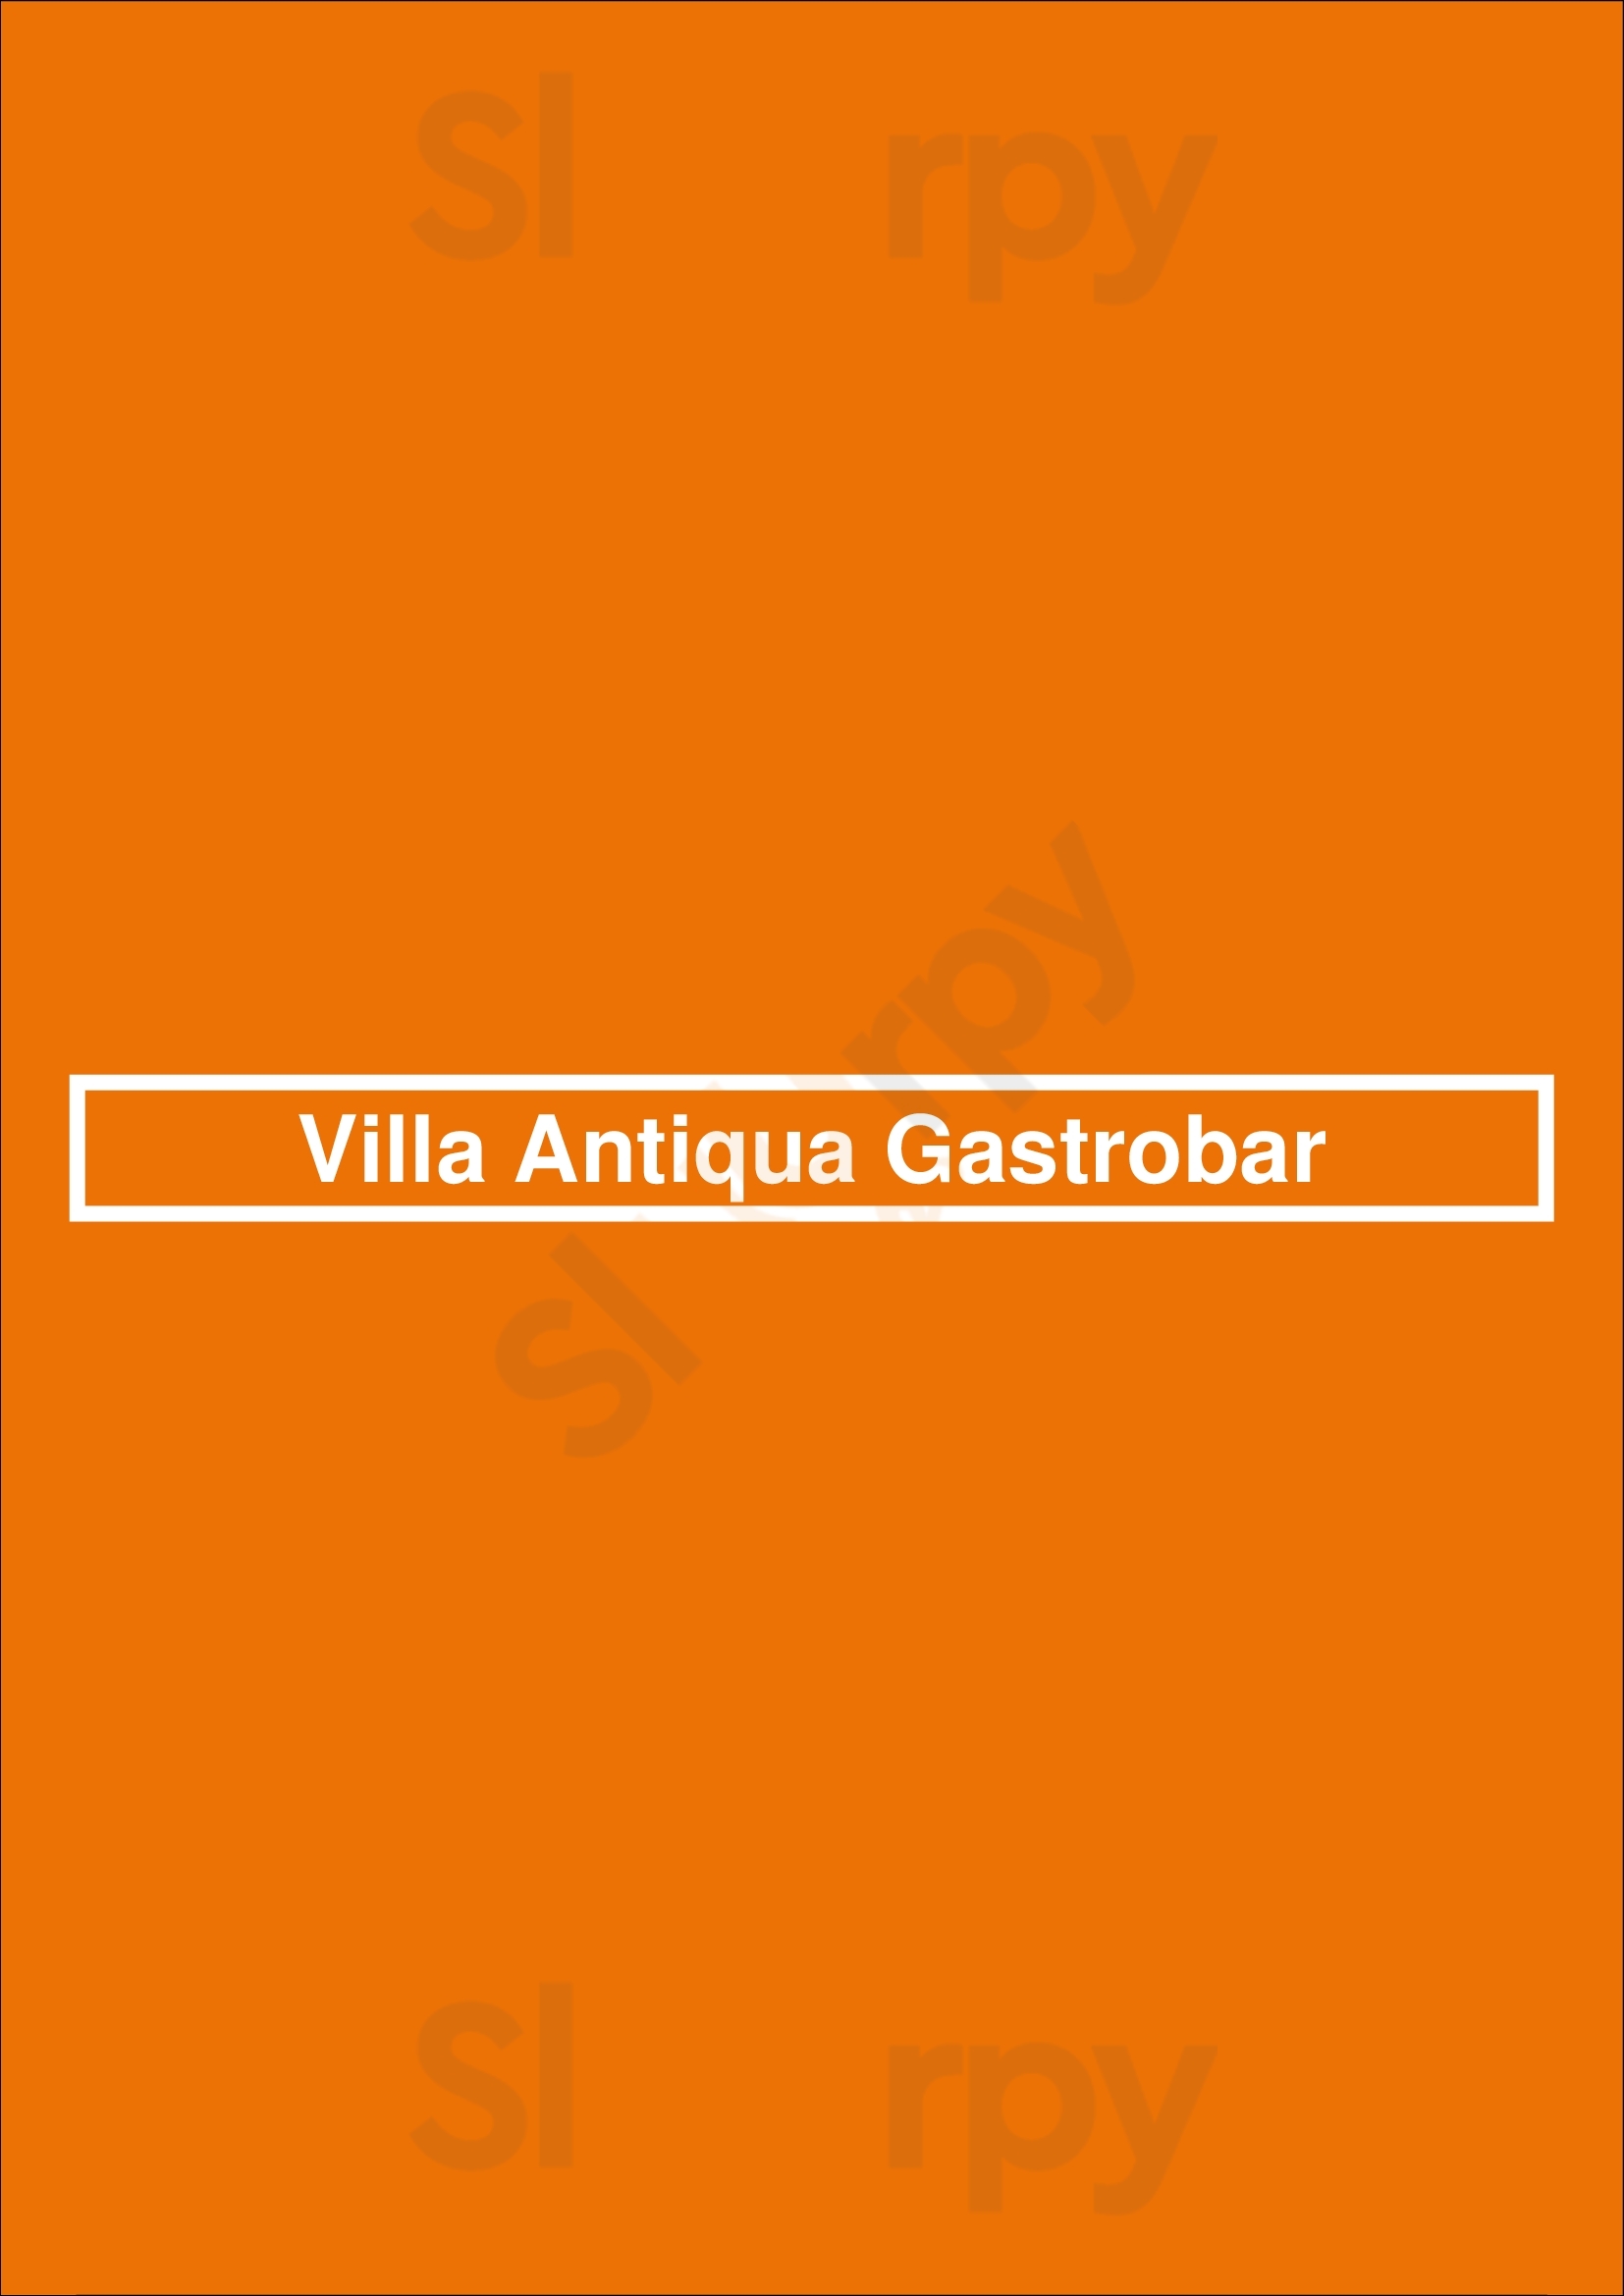 Villa Antiqua Gastrobar Romariz Menu - 1